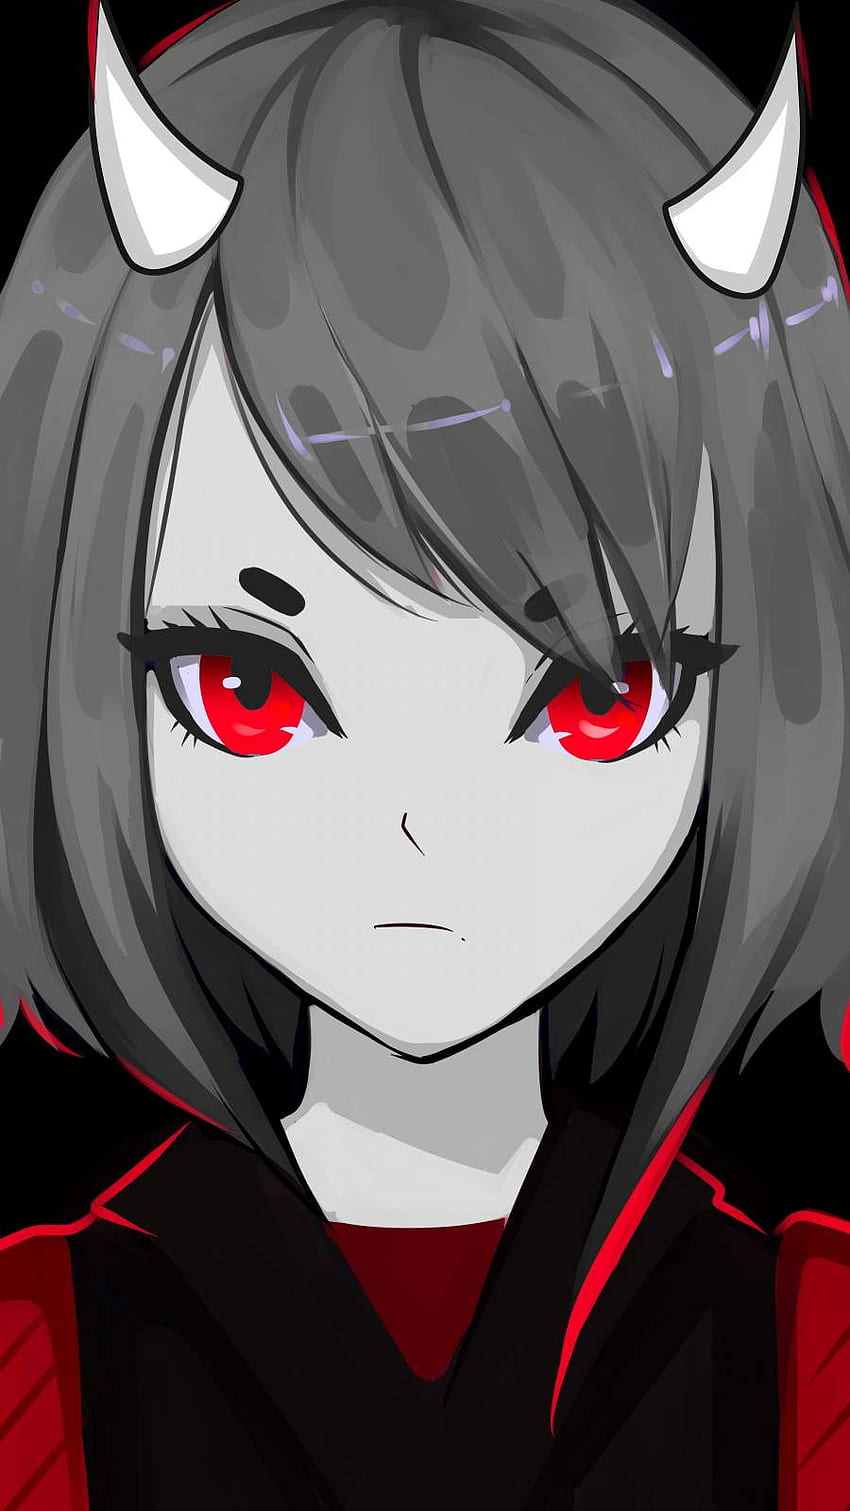 prompthunt: evil anime girl psycho